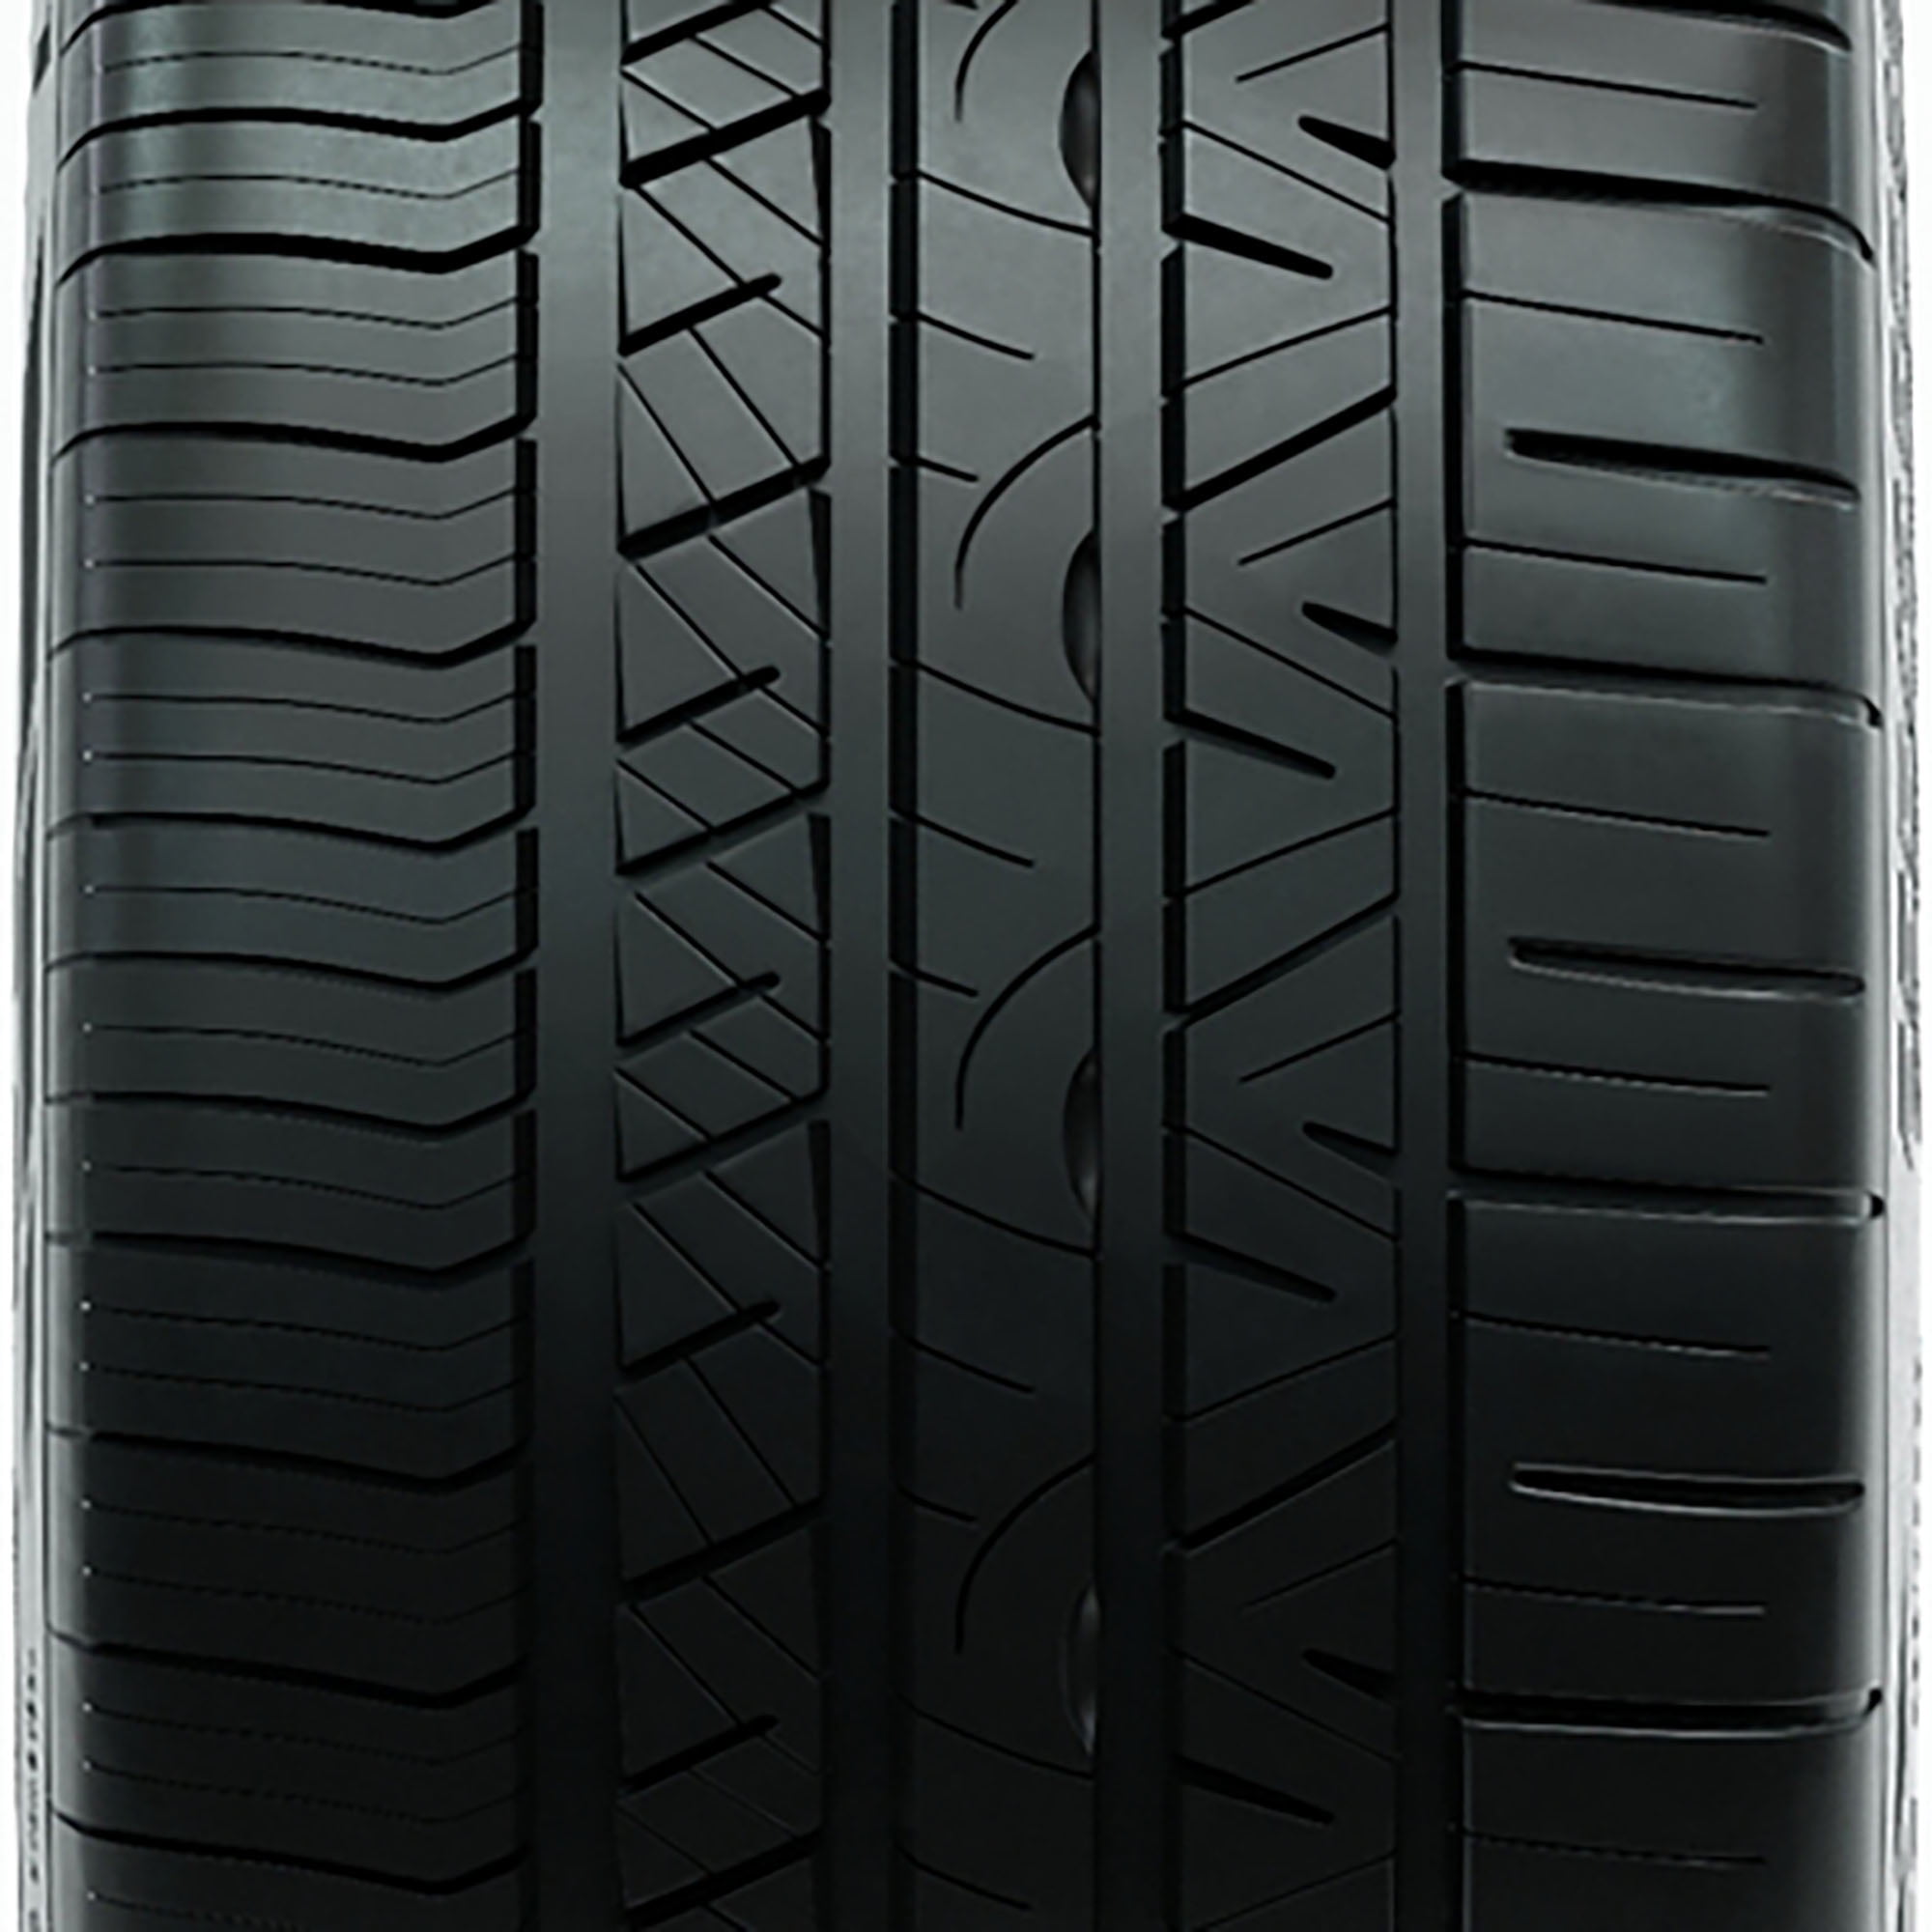 Cooper Zeon RS3-G1 All Season 235/50R17 96W Passenger Tire